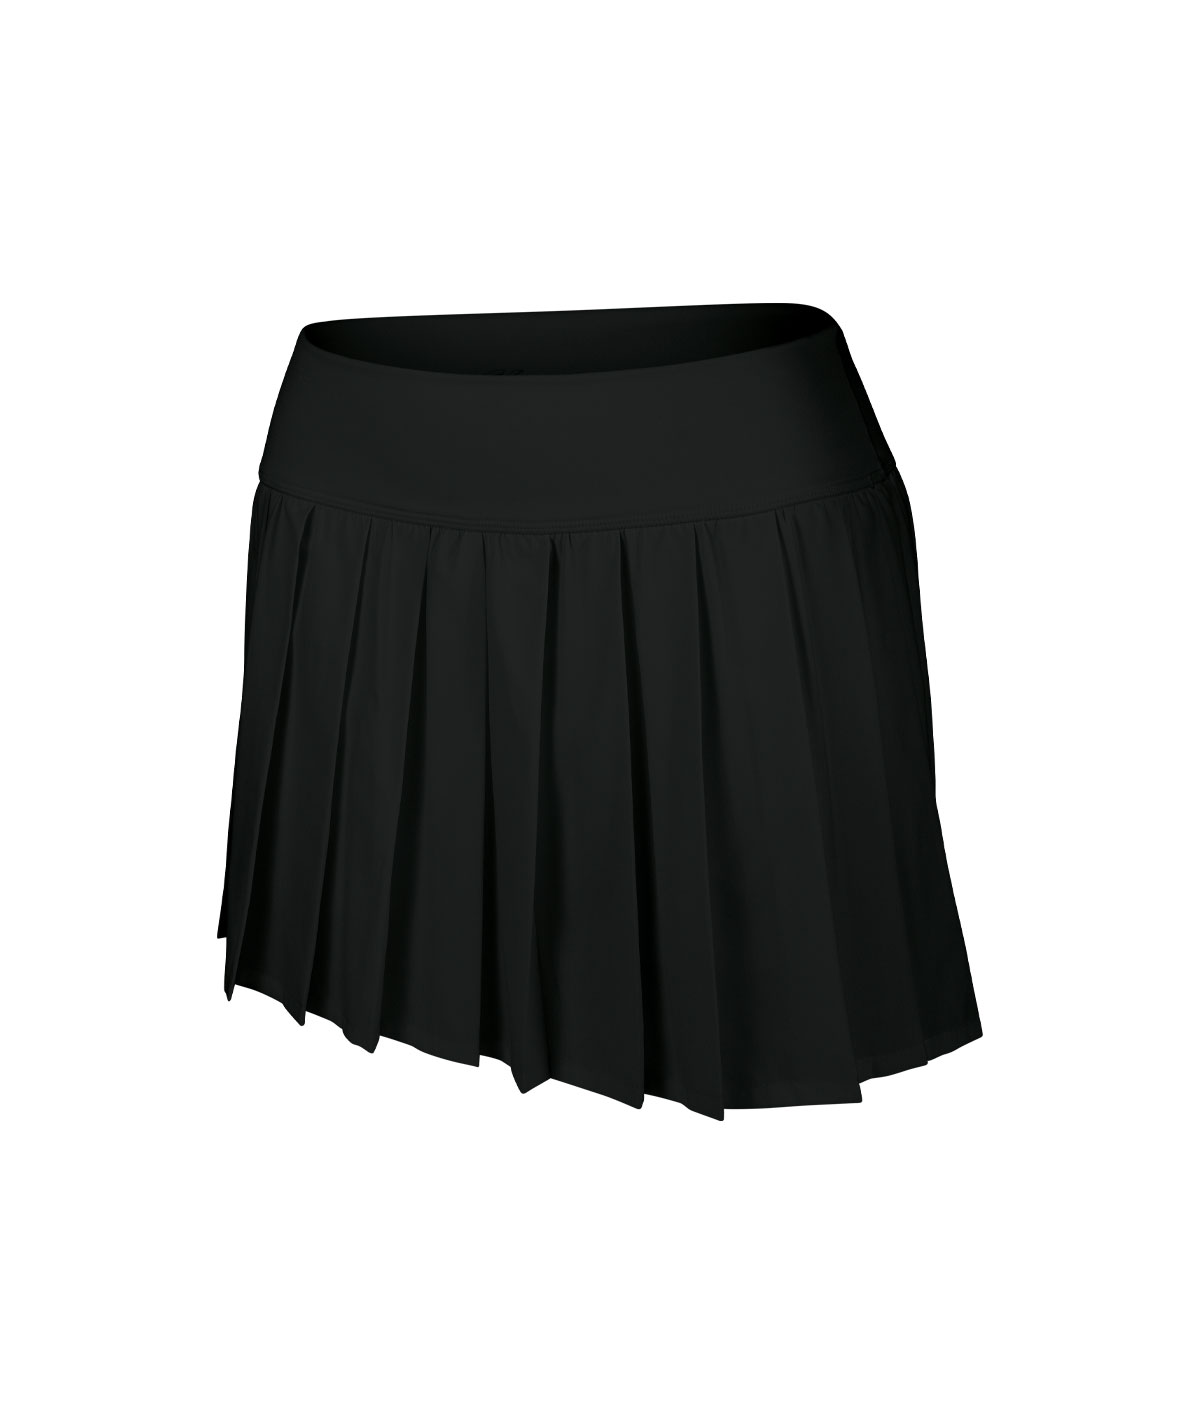 GK Pleated Skirt - Cheer Practice Wear | Omni Cheer